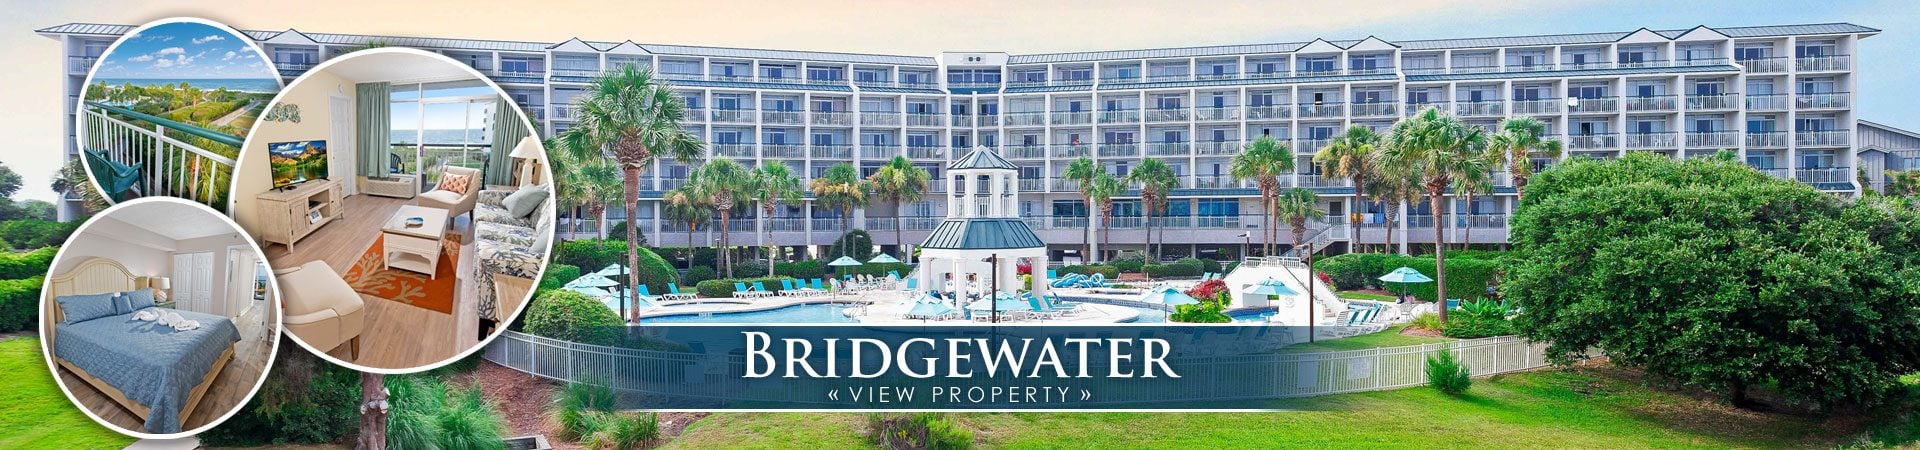 Bridgewater View Property 1920x450 1 4 